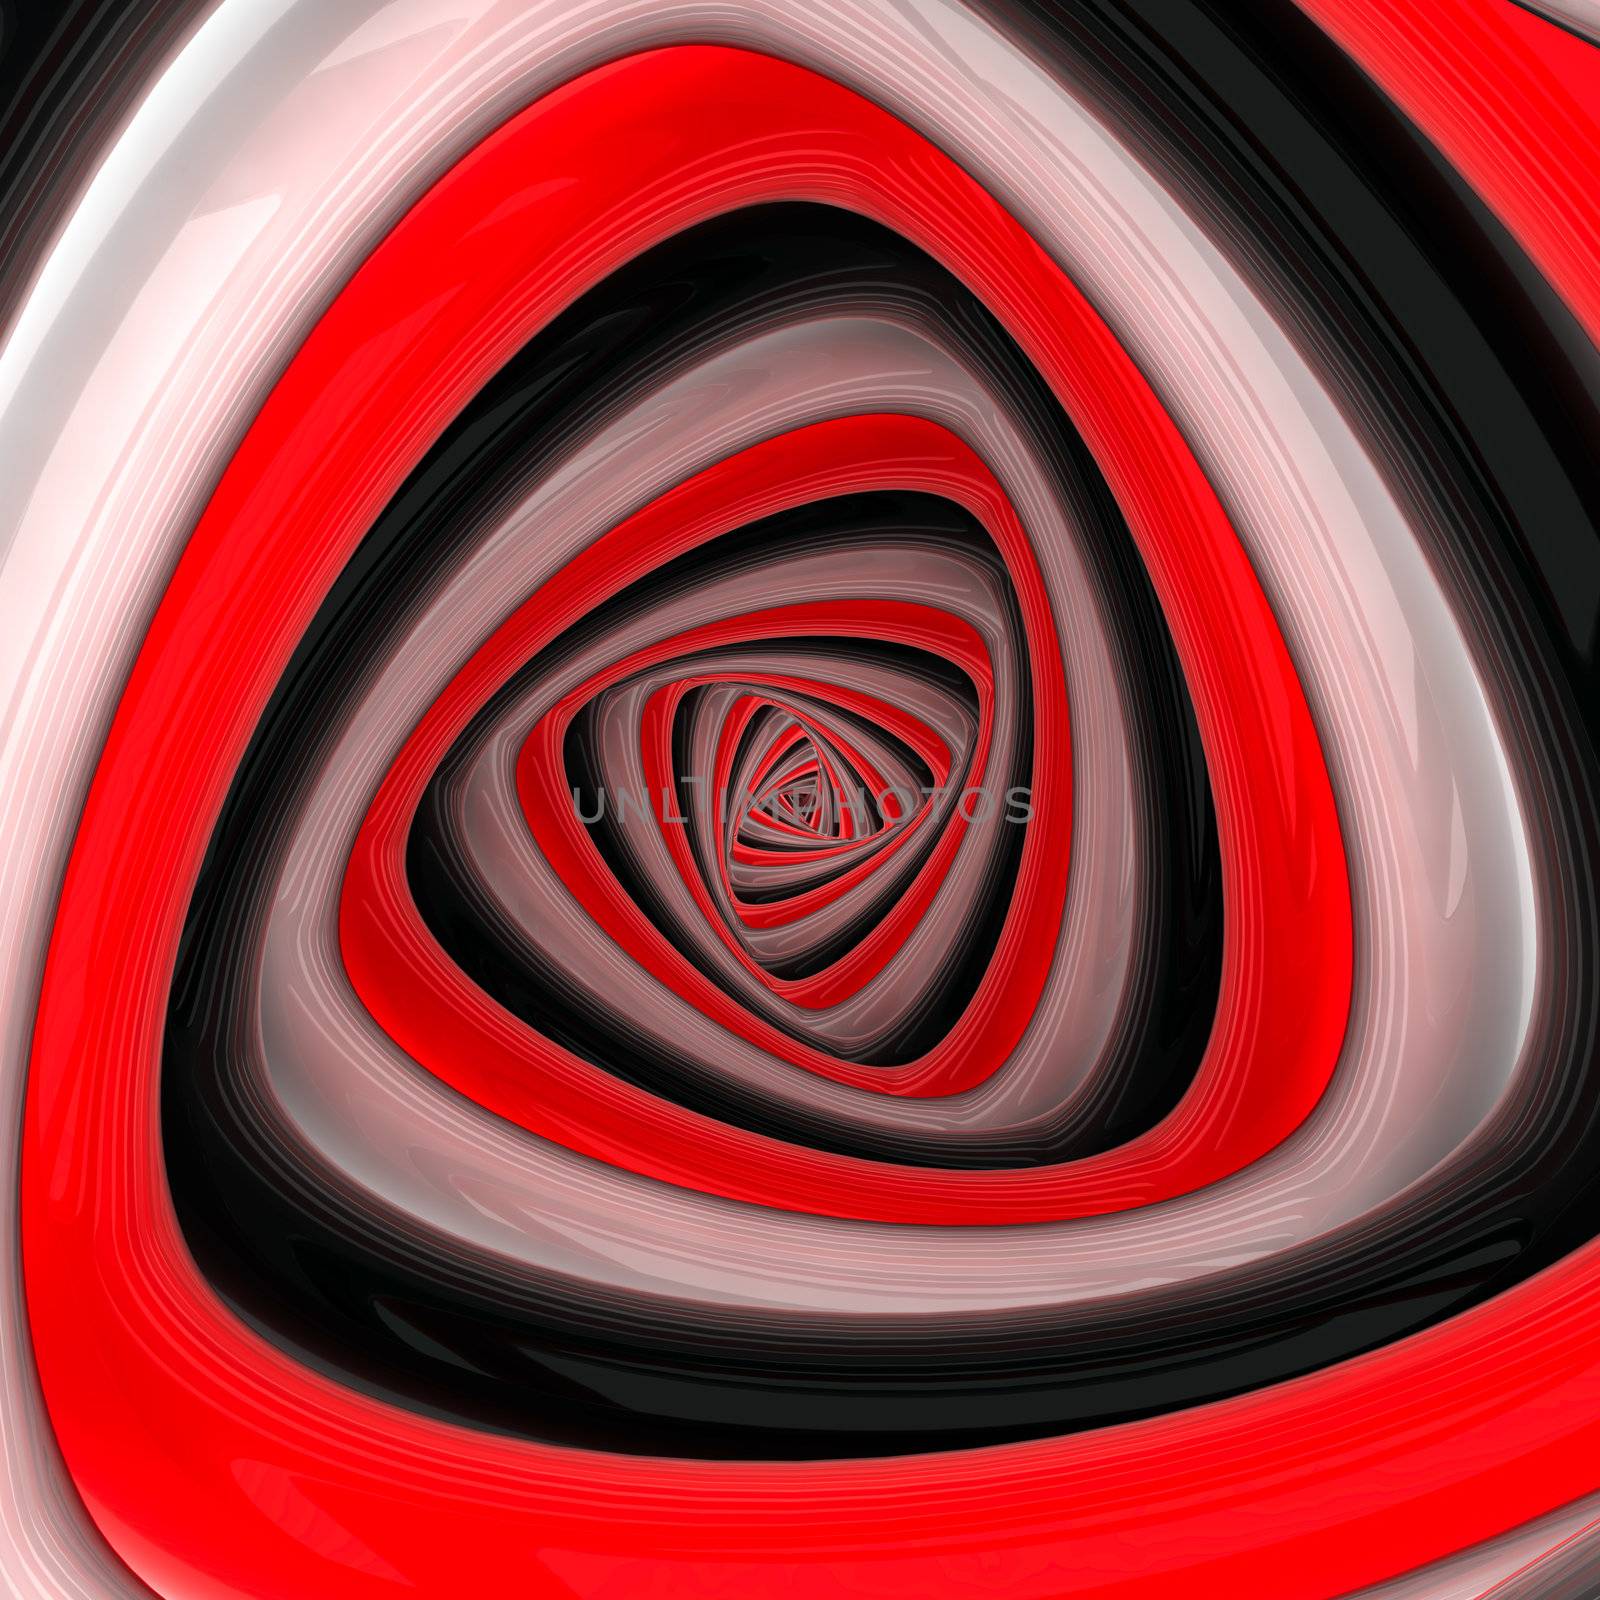 Triangular vortex of black, white, red colors